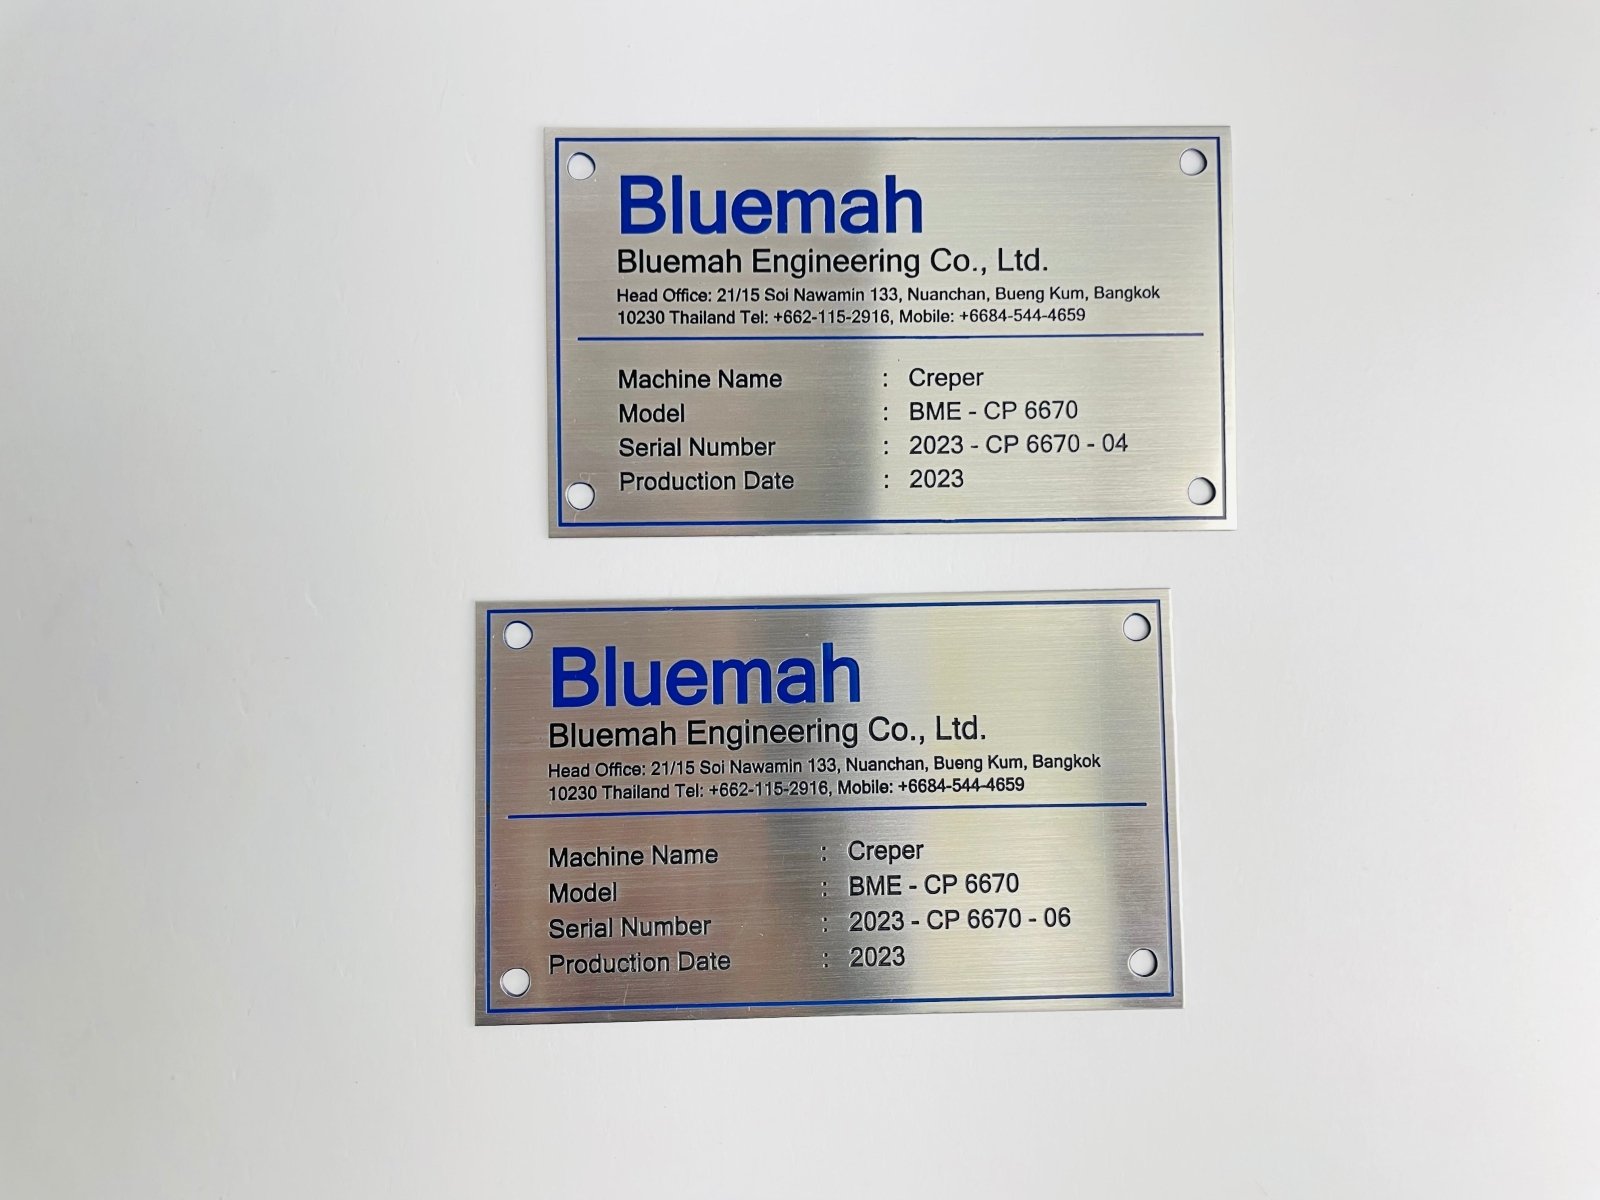 bluemah engineering co., ltd